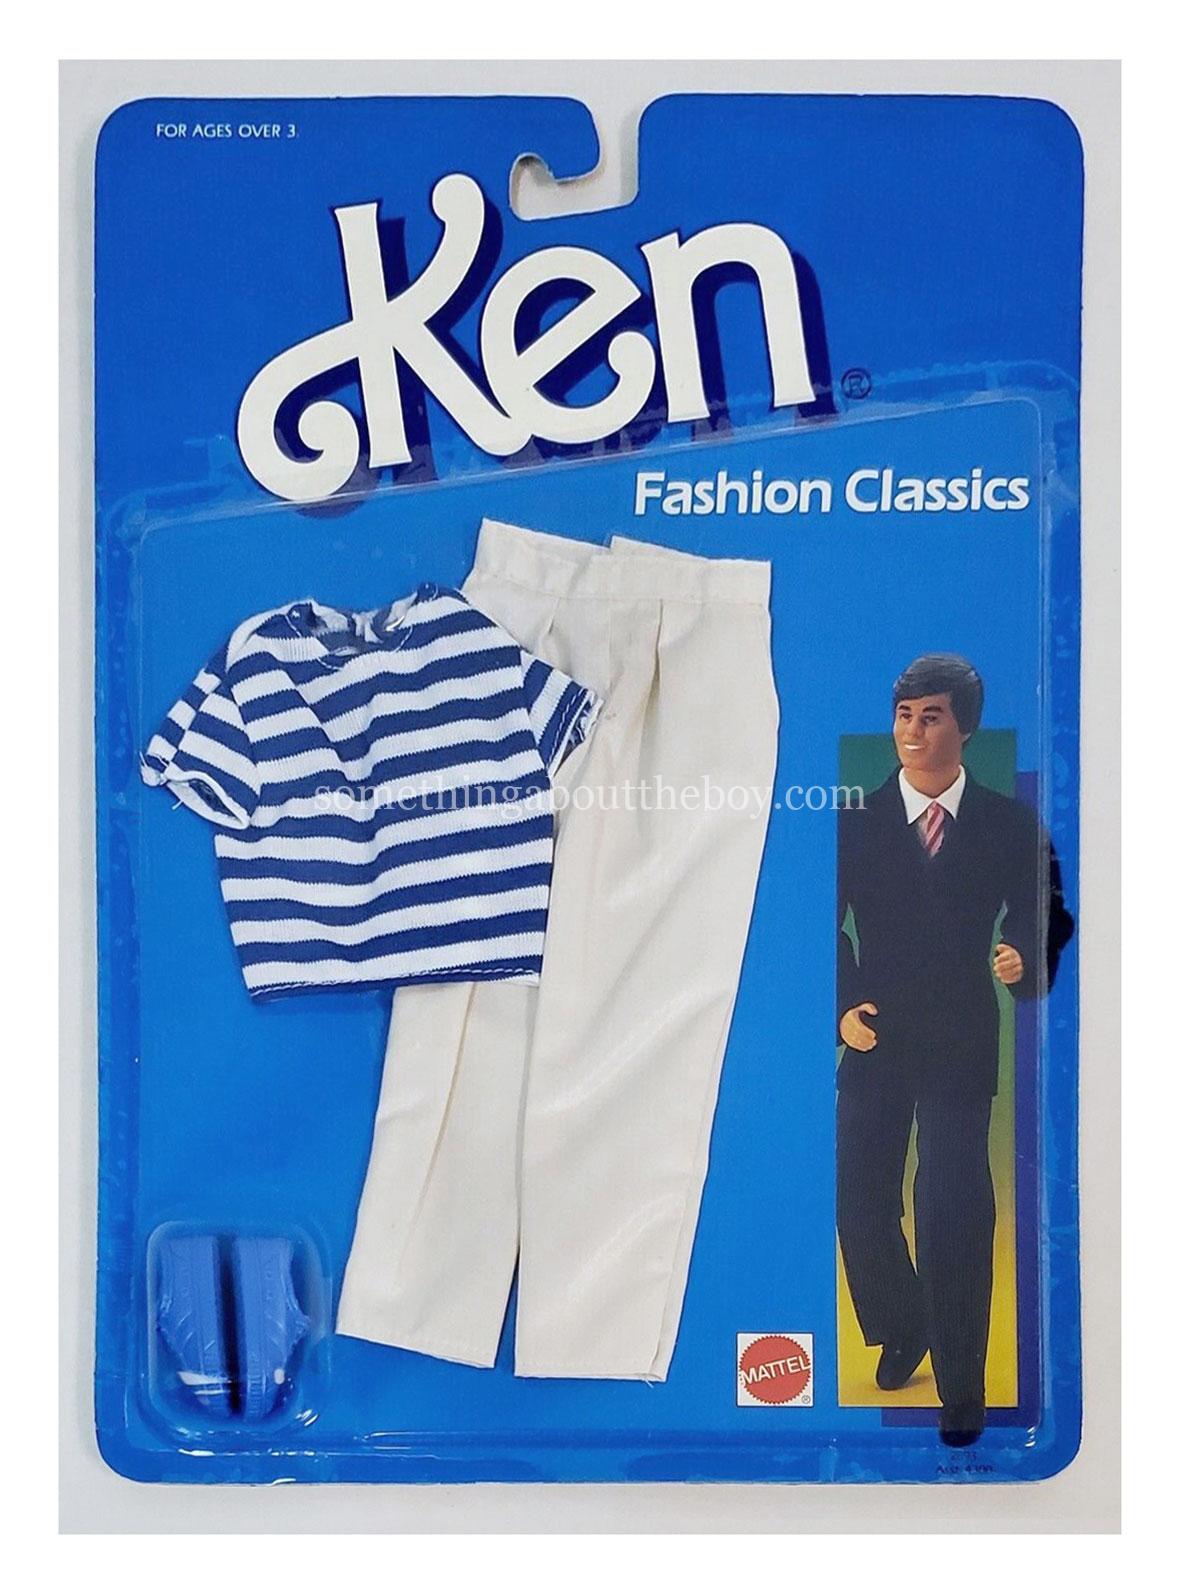 1986-87 Kmart Fashion Classics #2893 (Variation 5)